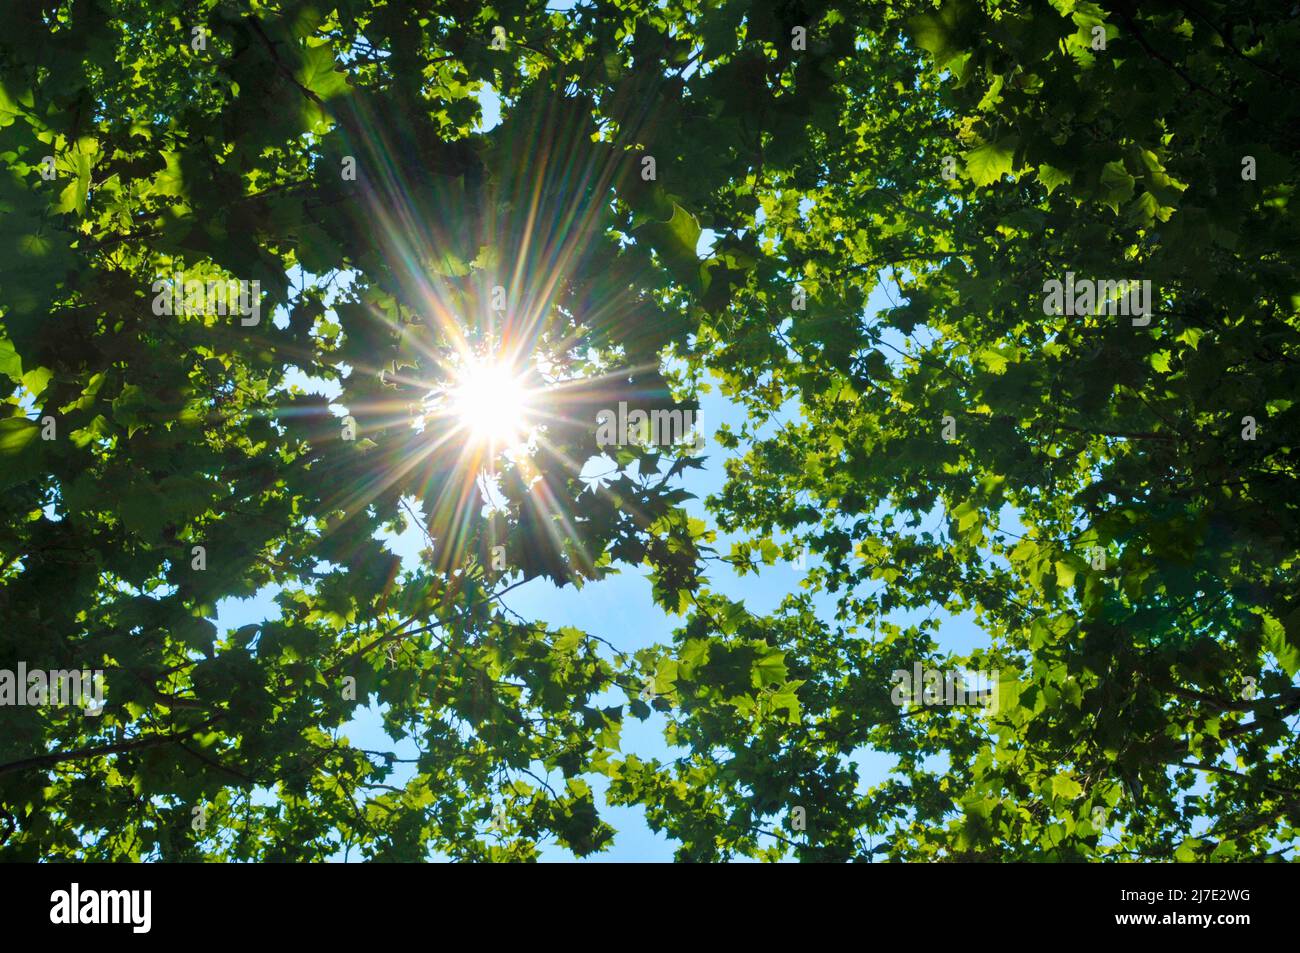 The sun shining through sycamore trees Stock Photo